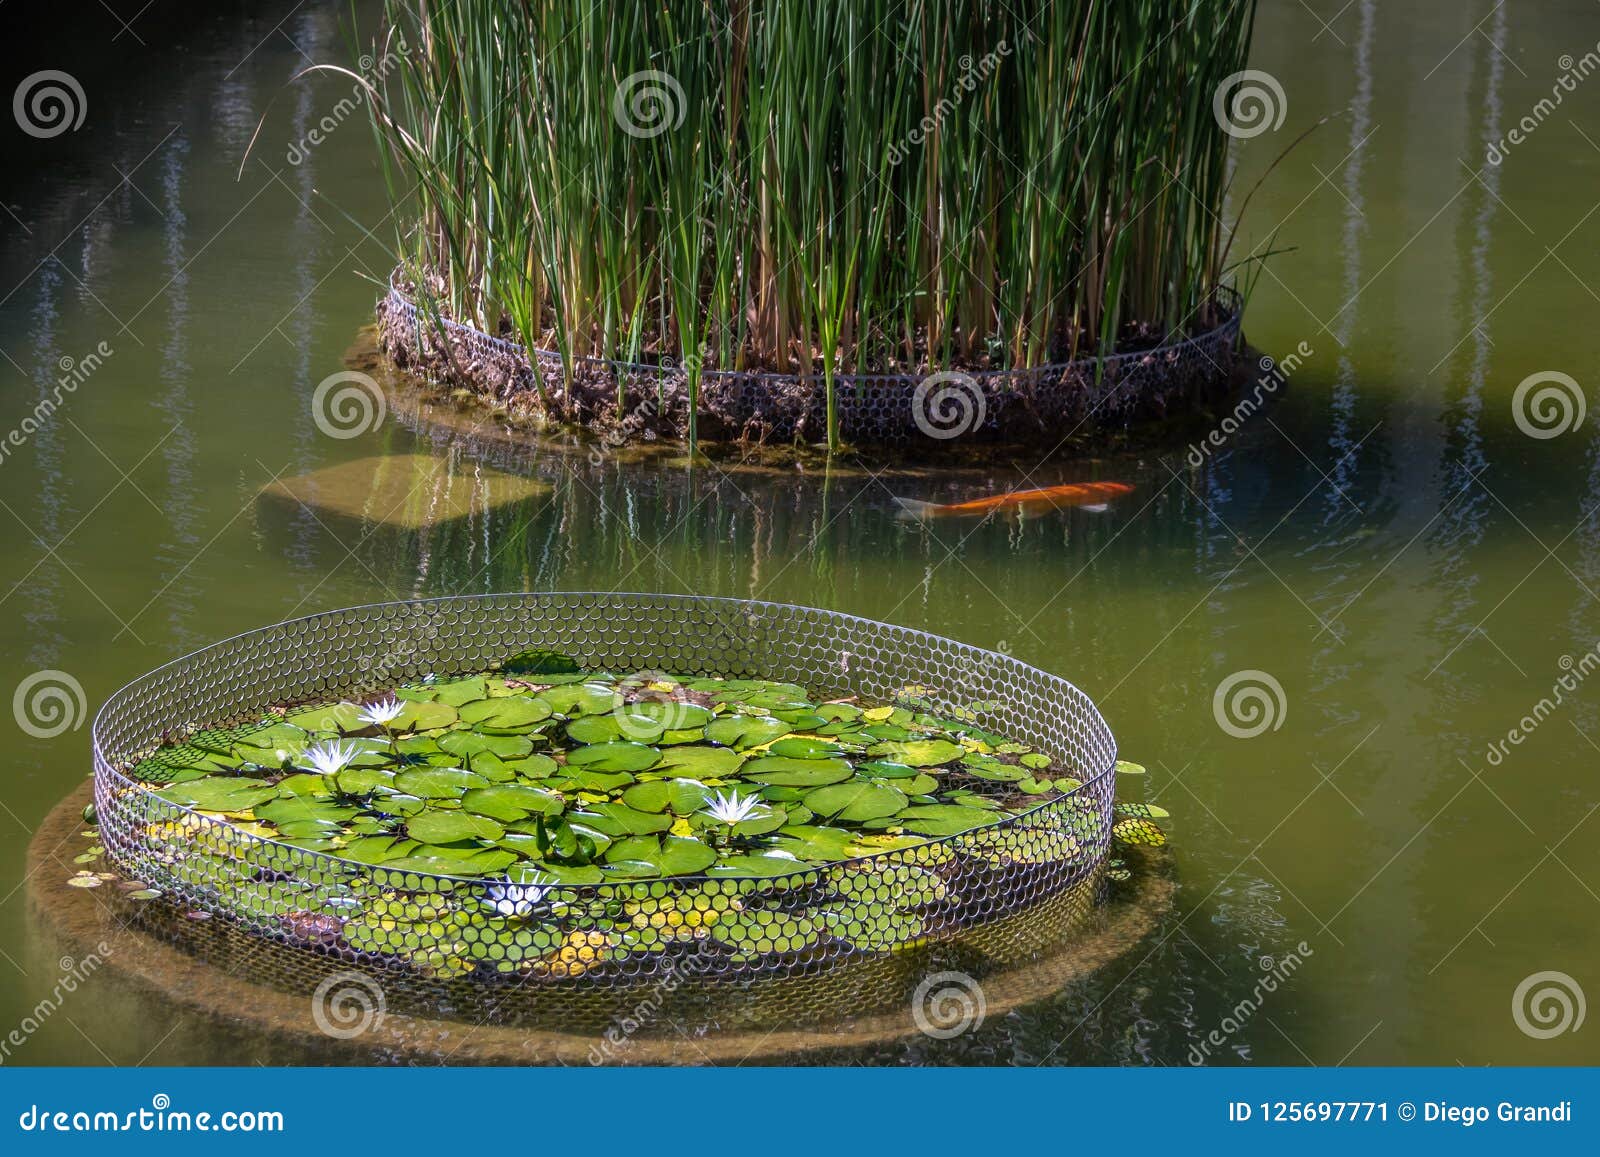 nymphaea lotus flower and koi fish at itamaraty palace pond - brasilia, distrito federal, brazil